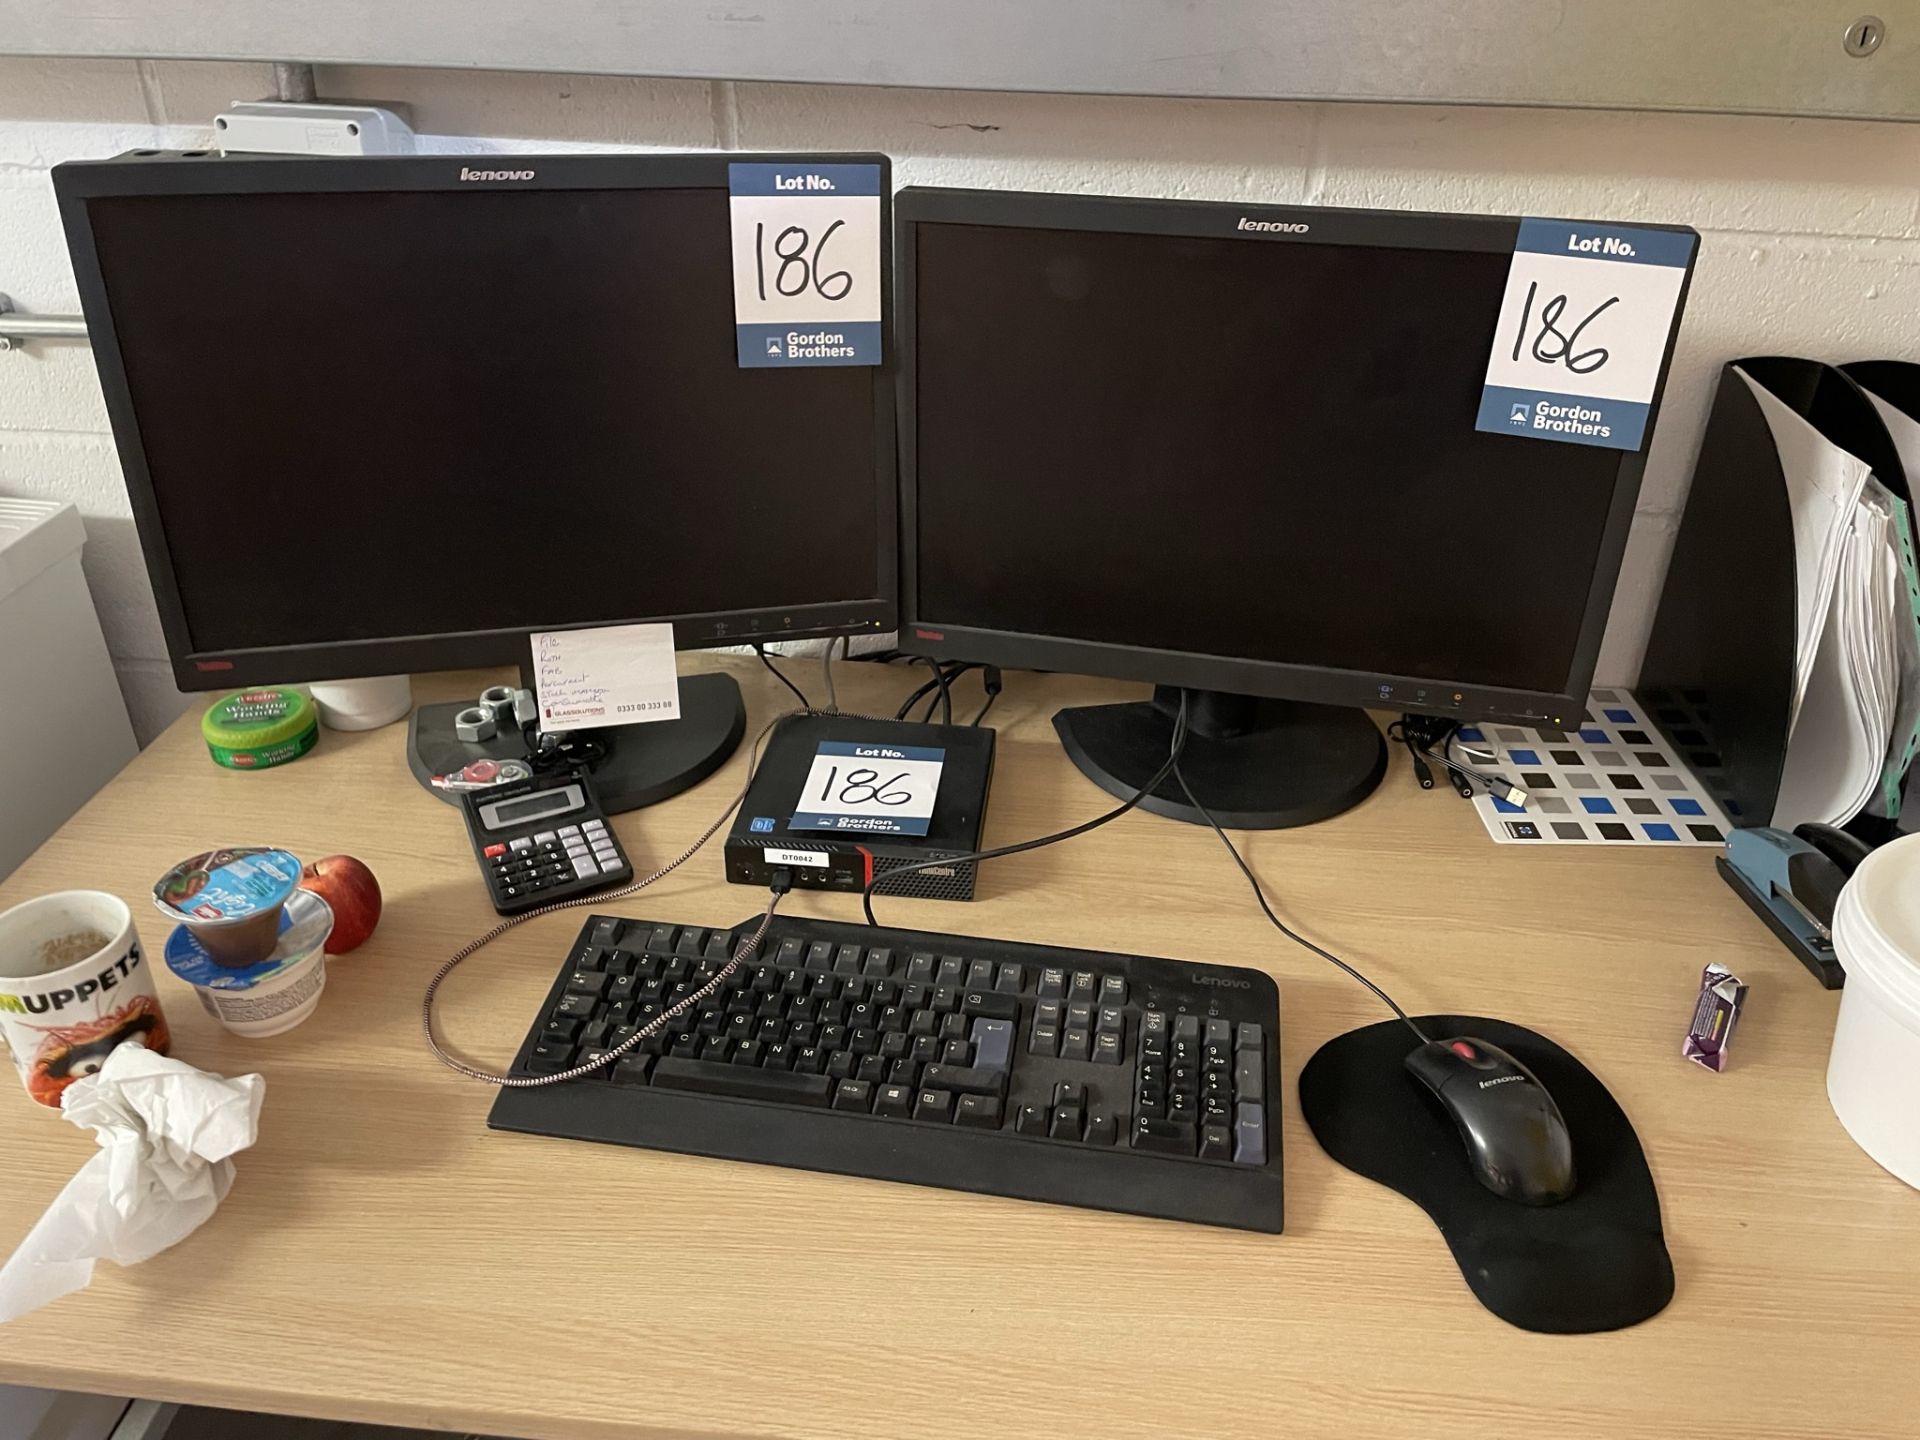 Lenova, Thinkcentre terminal, 2x (no.) Lenovo monitors, keyboard and mouse